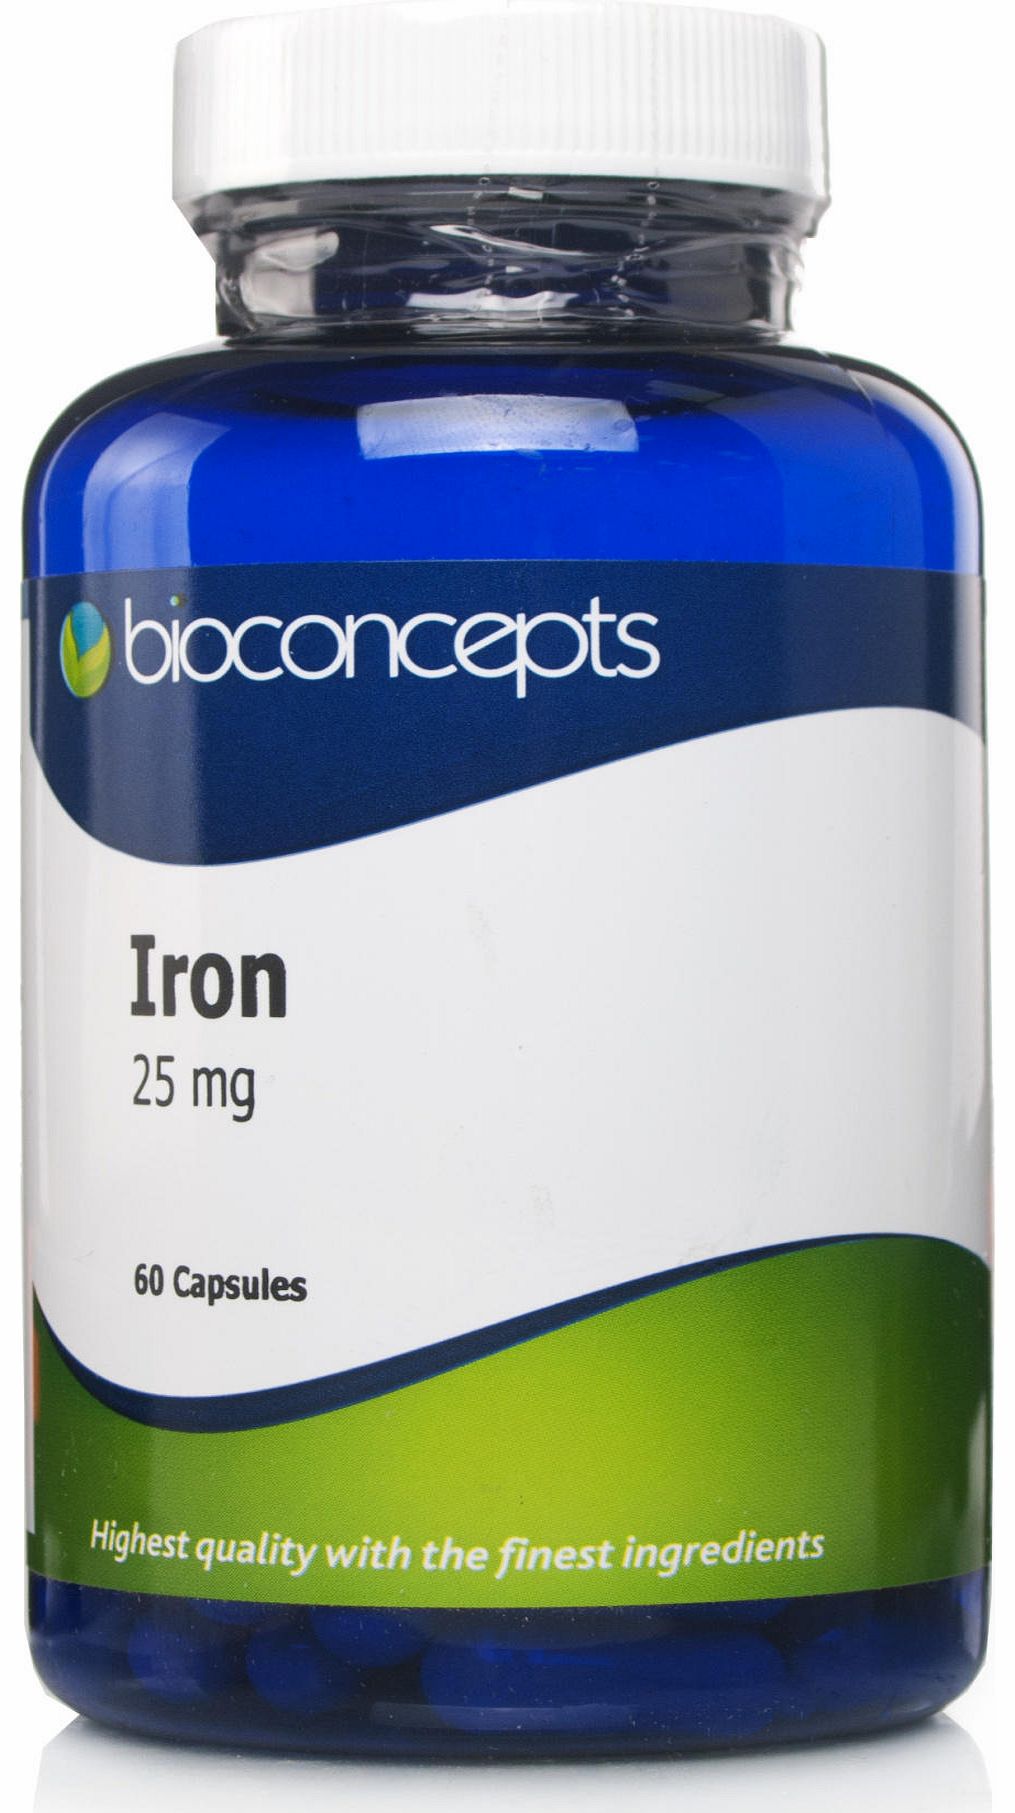 Bioconcepts Iron 25mg Capsules